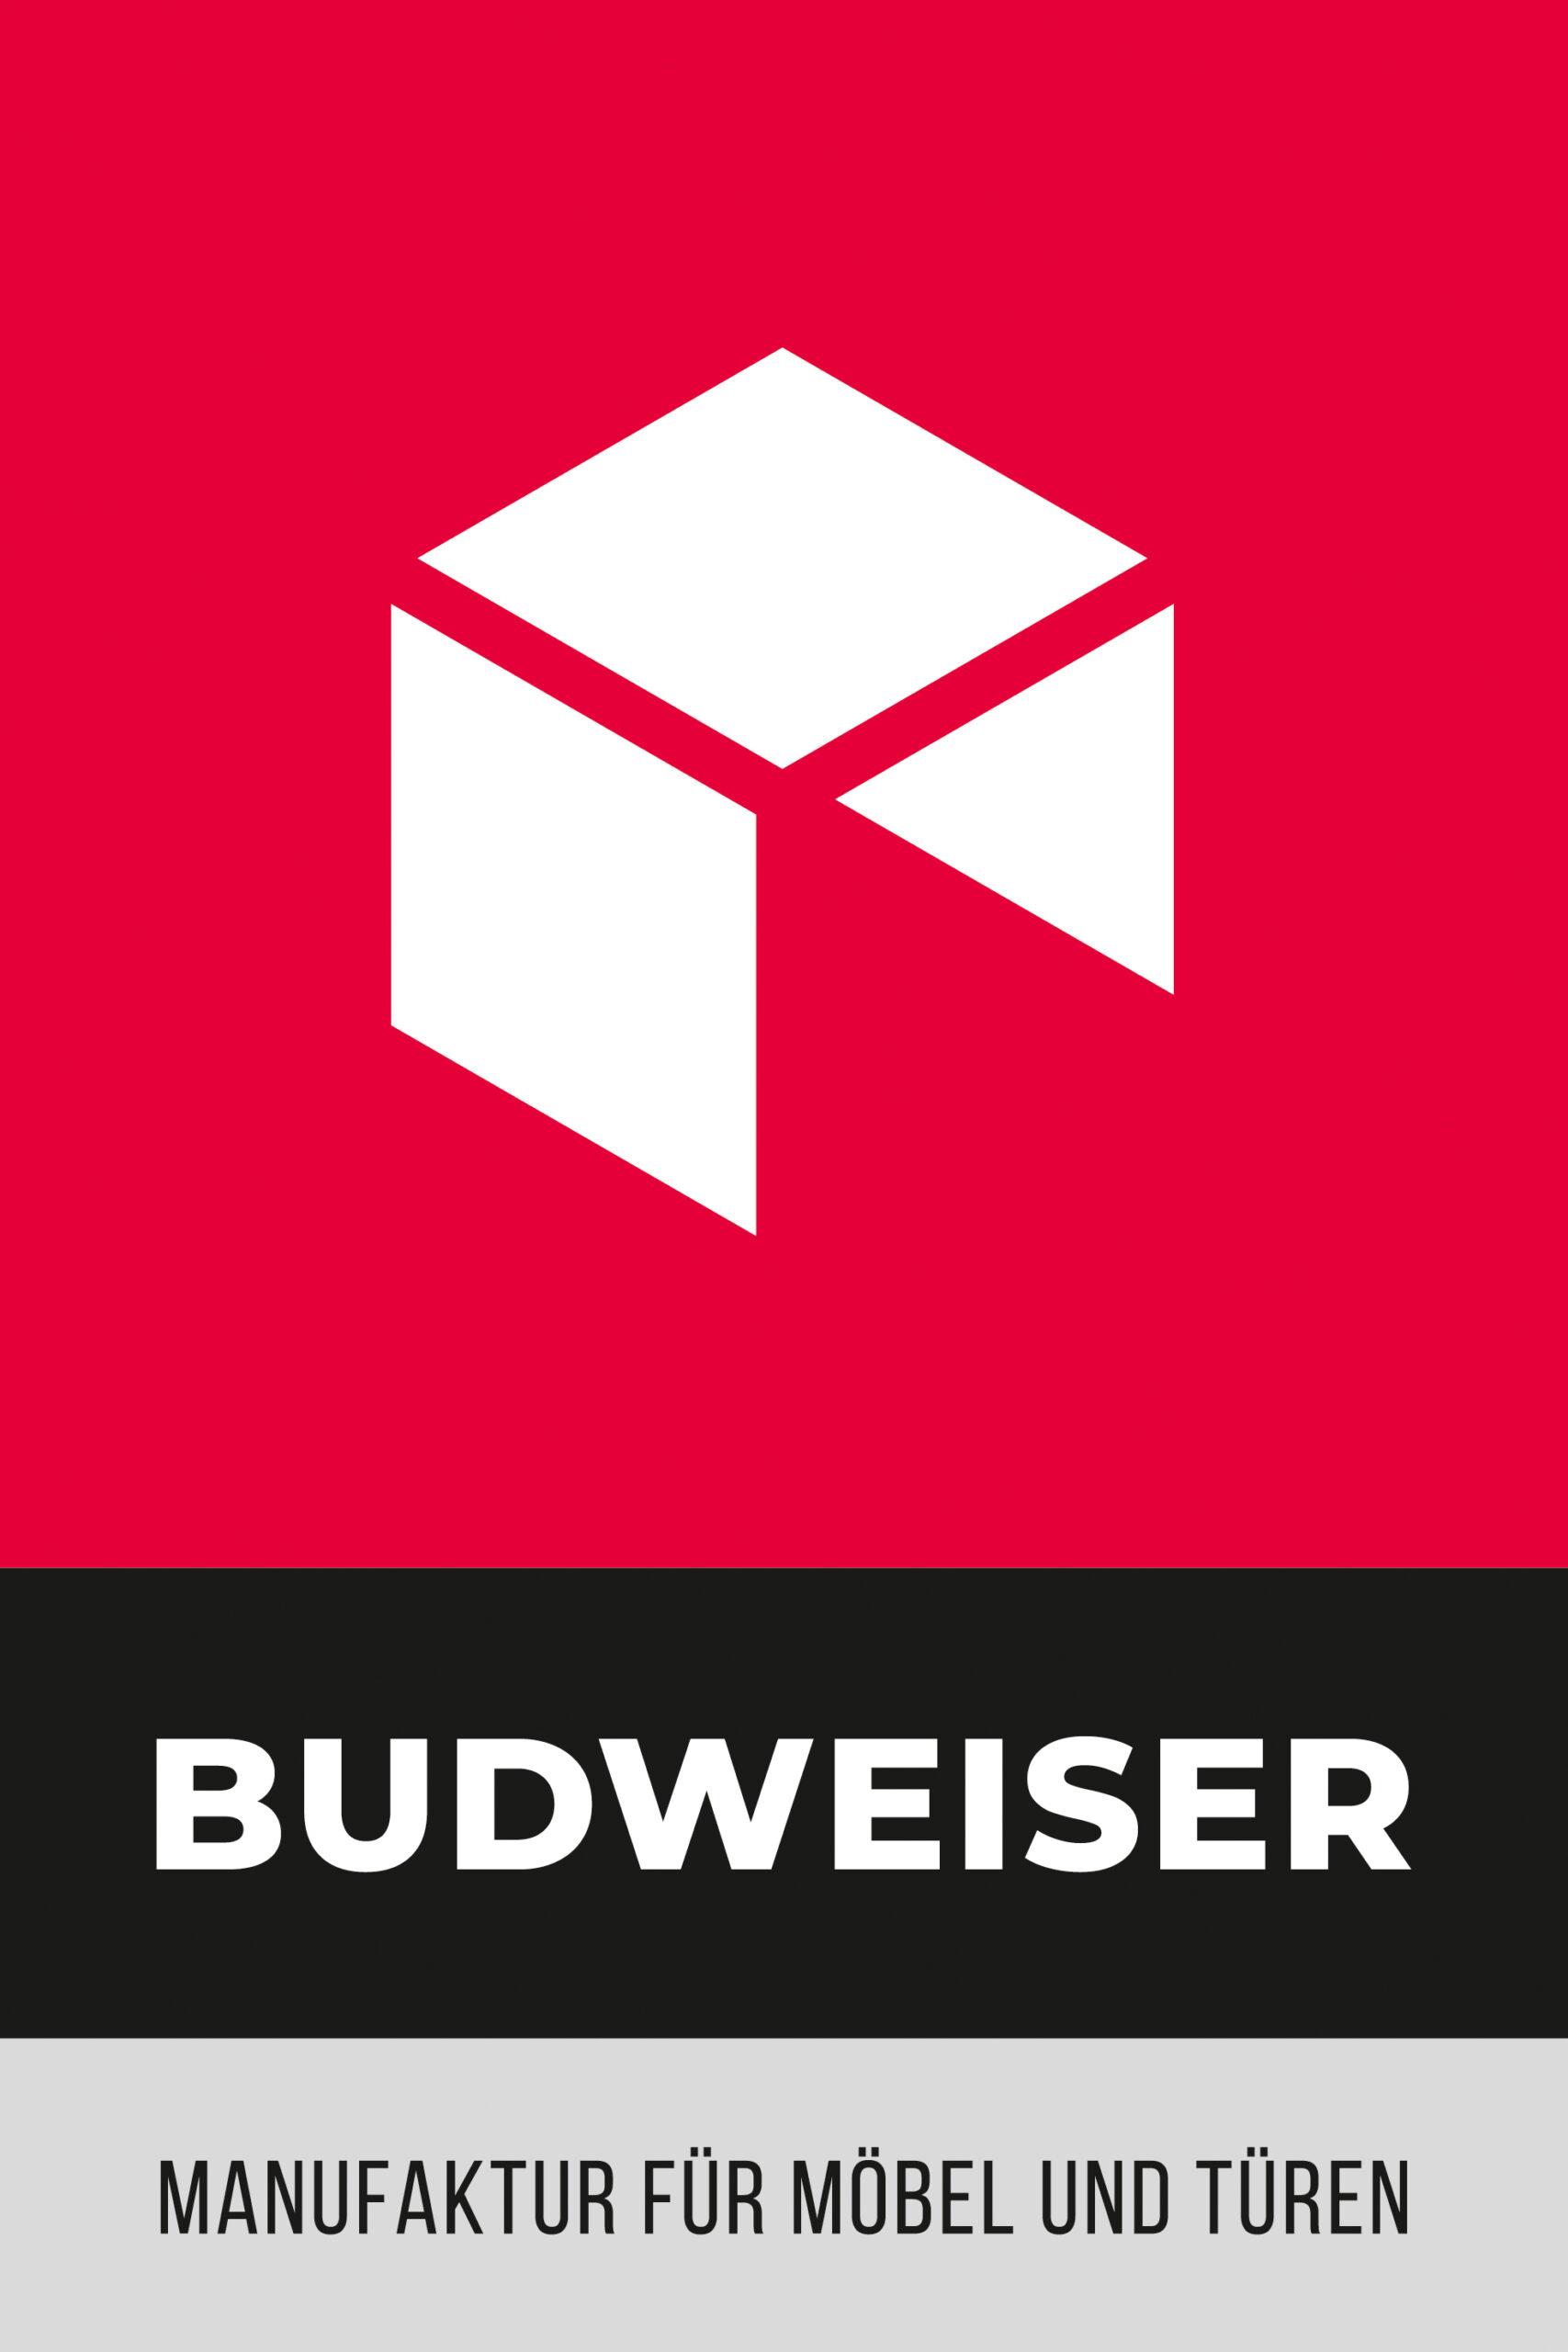 Budweiser-Rank Möbel & Türen GmbH & Co. KG